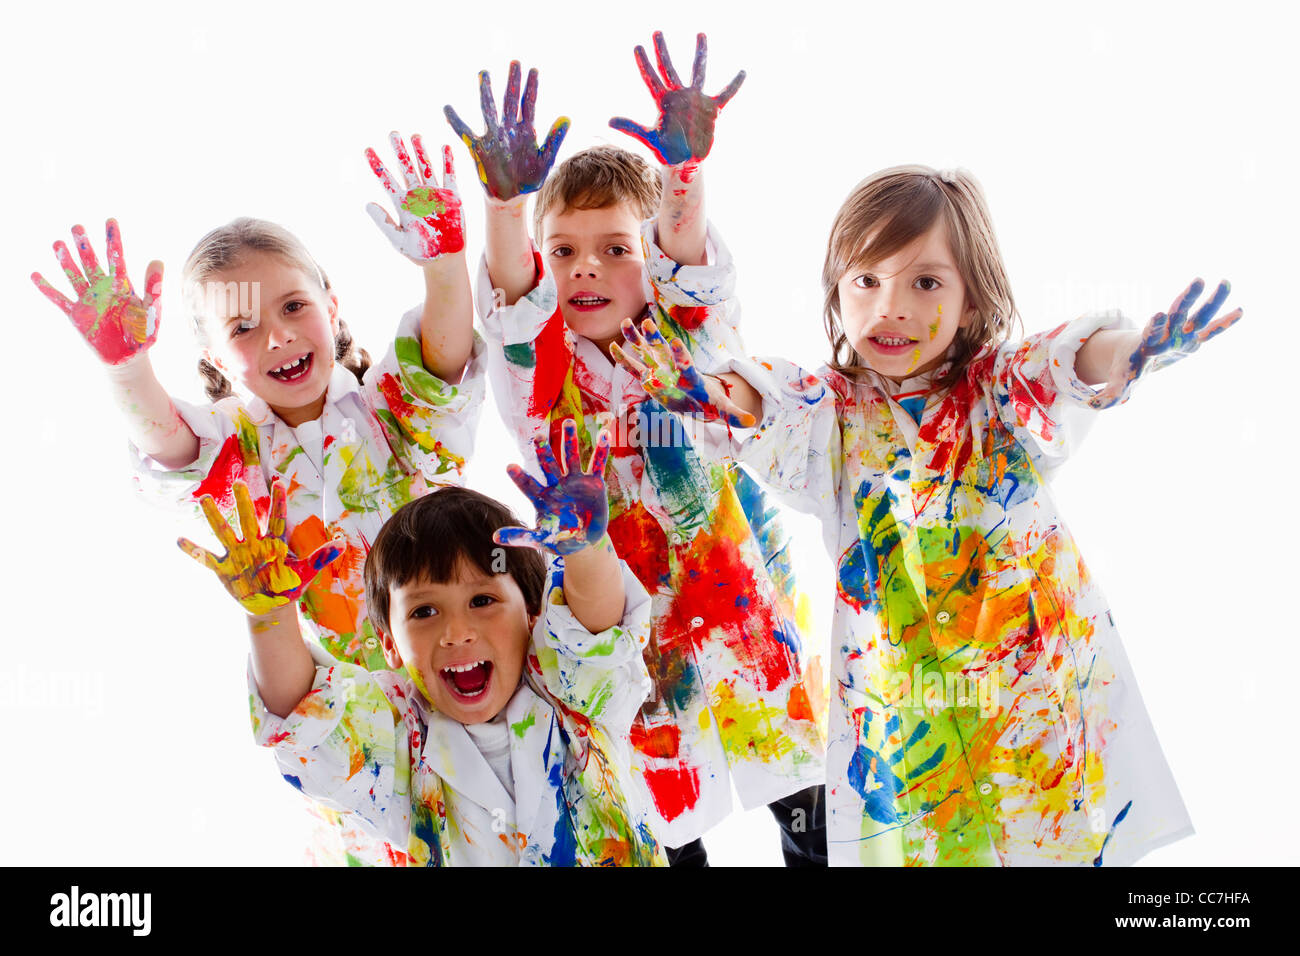 Messy Hispanic children finger painting Stock Photo - Alamy